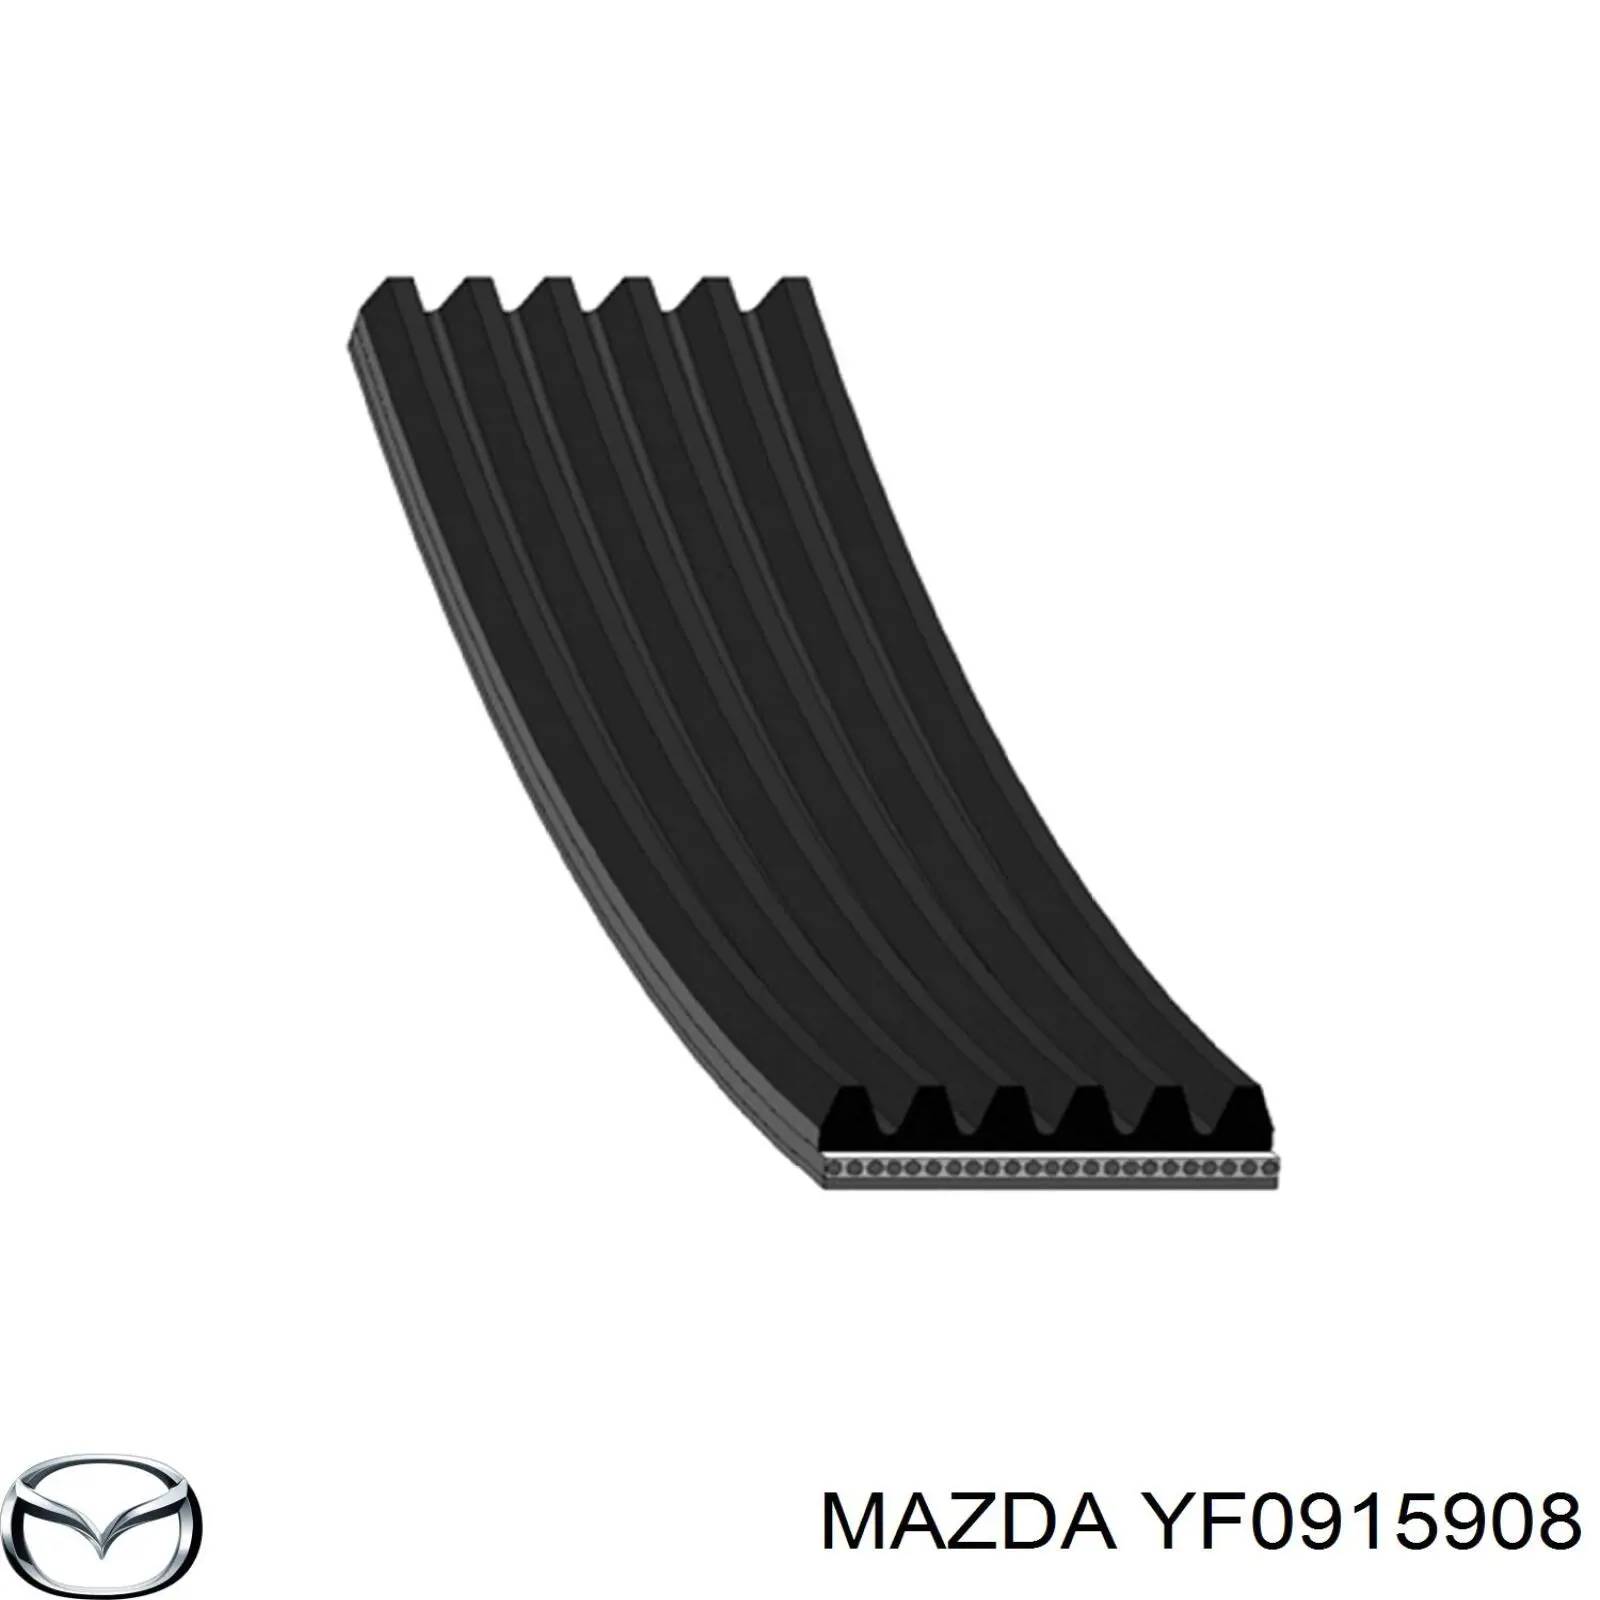 YF0915908 Mazda correa trapezoidal